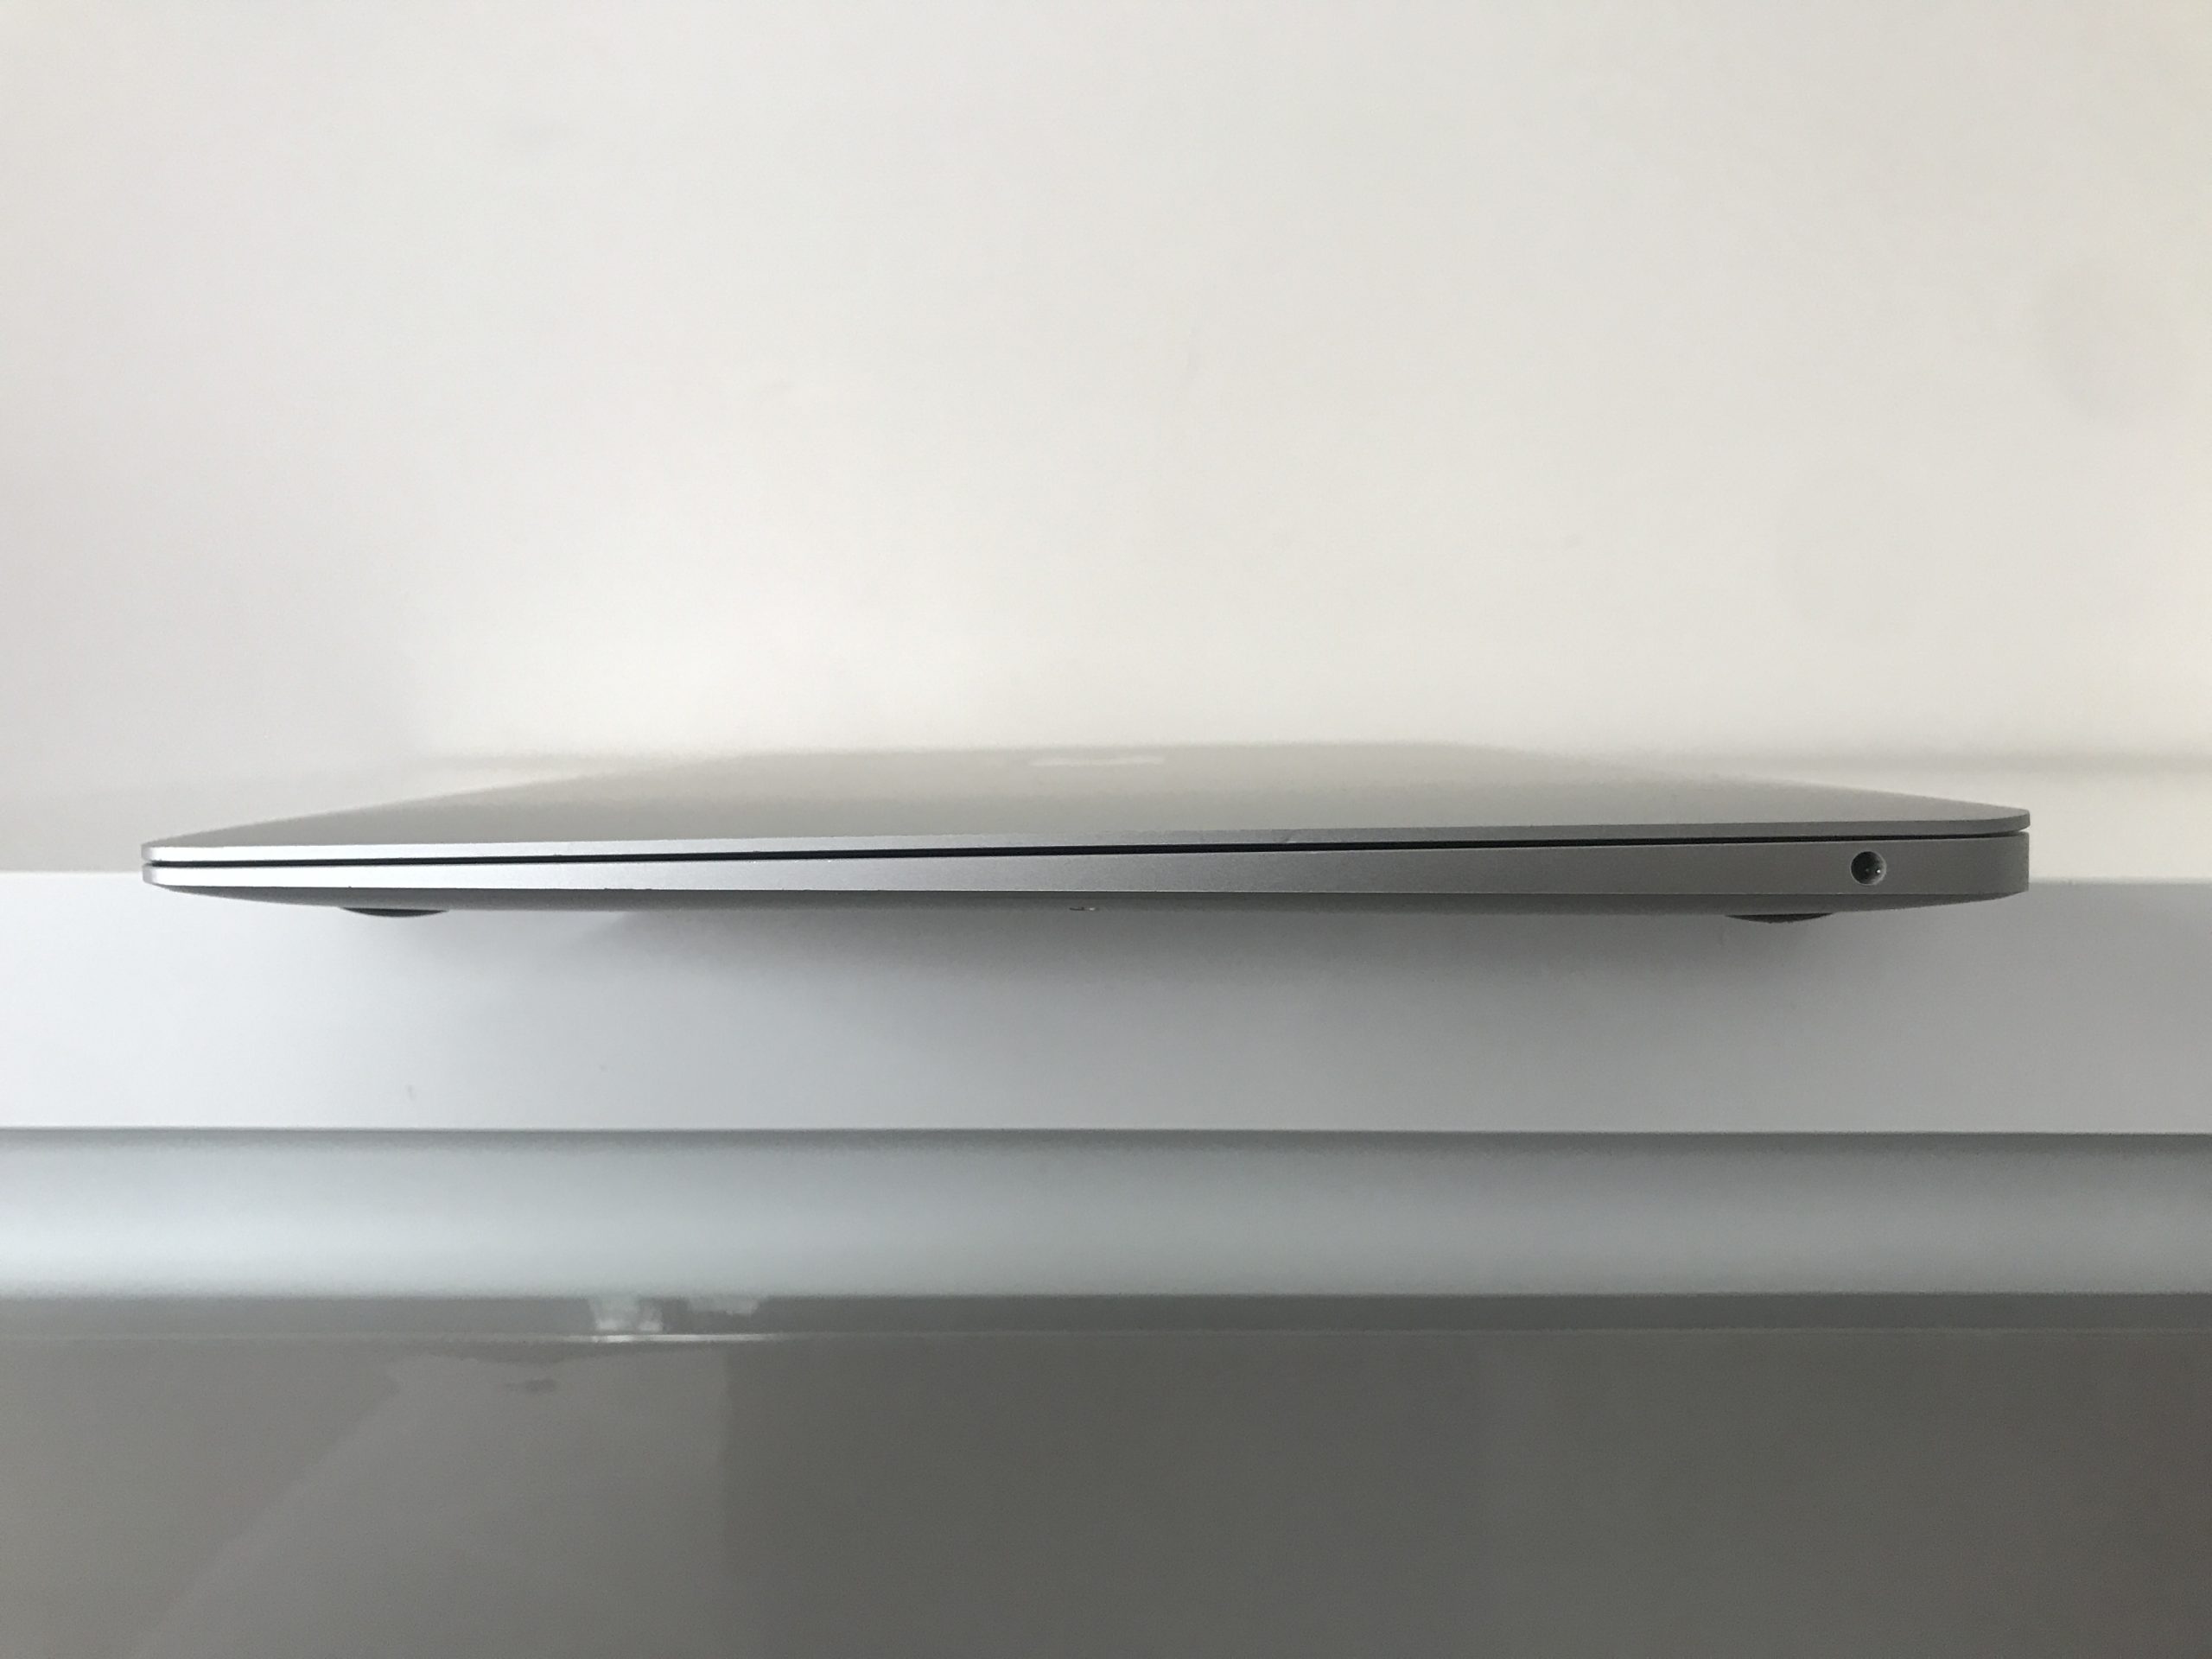 MacBook Air Retina – Core i5 – SSD 256Go – RAM 8Go